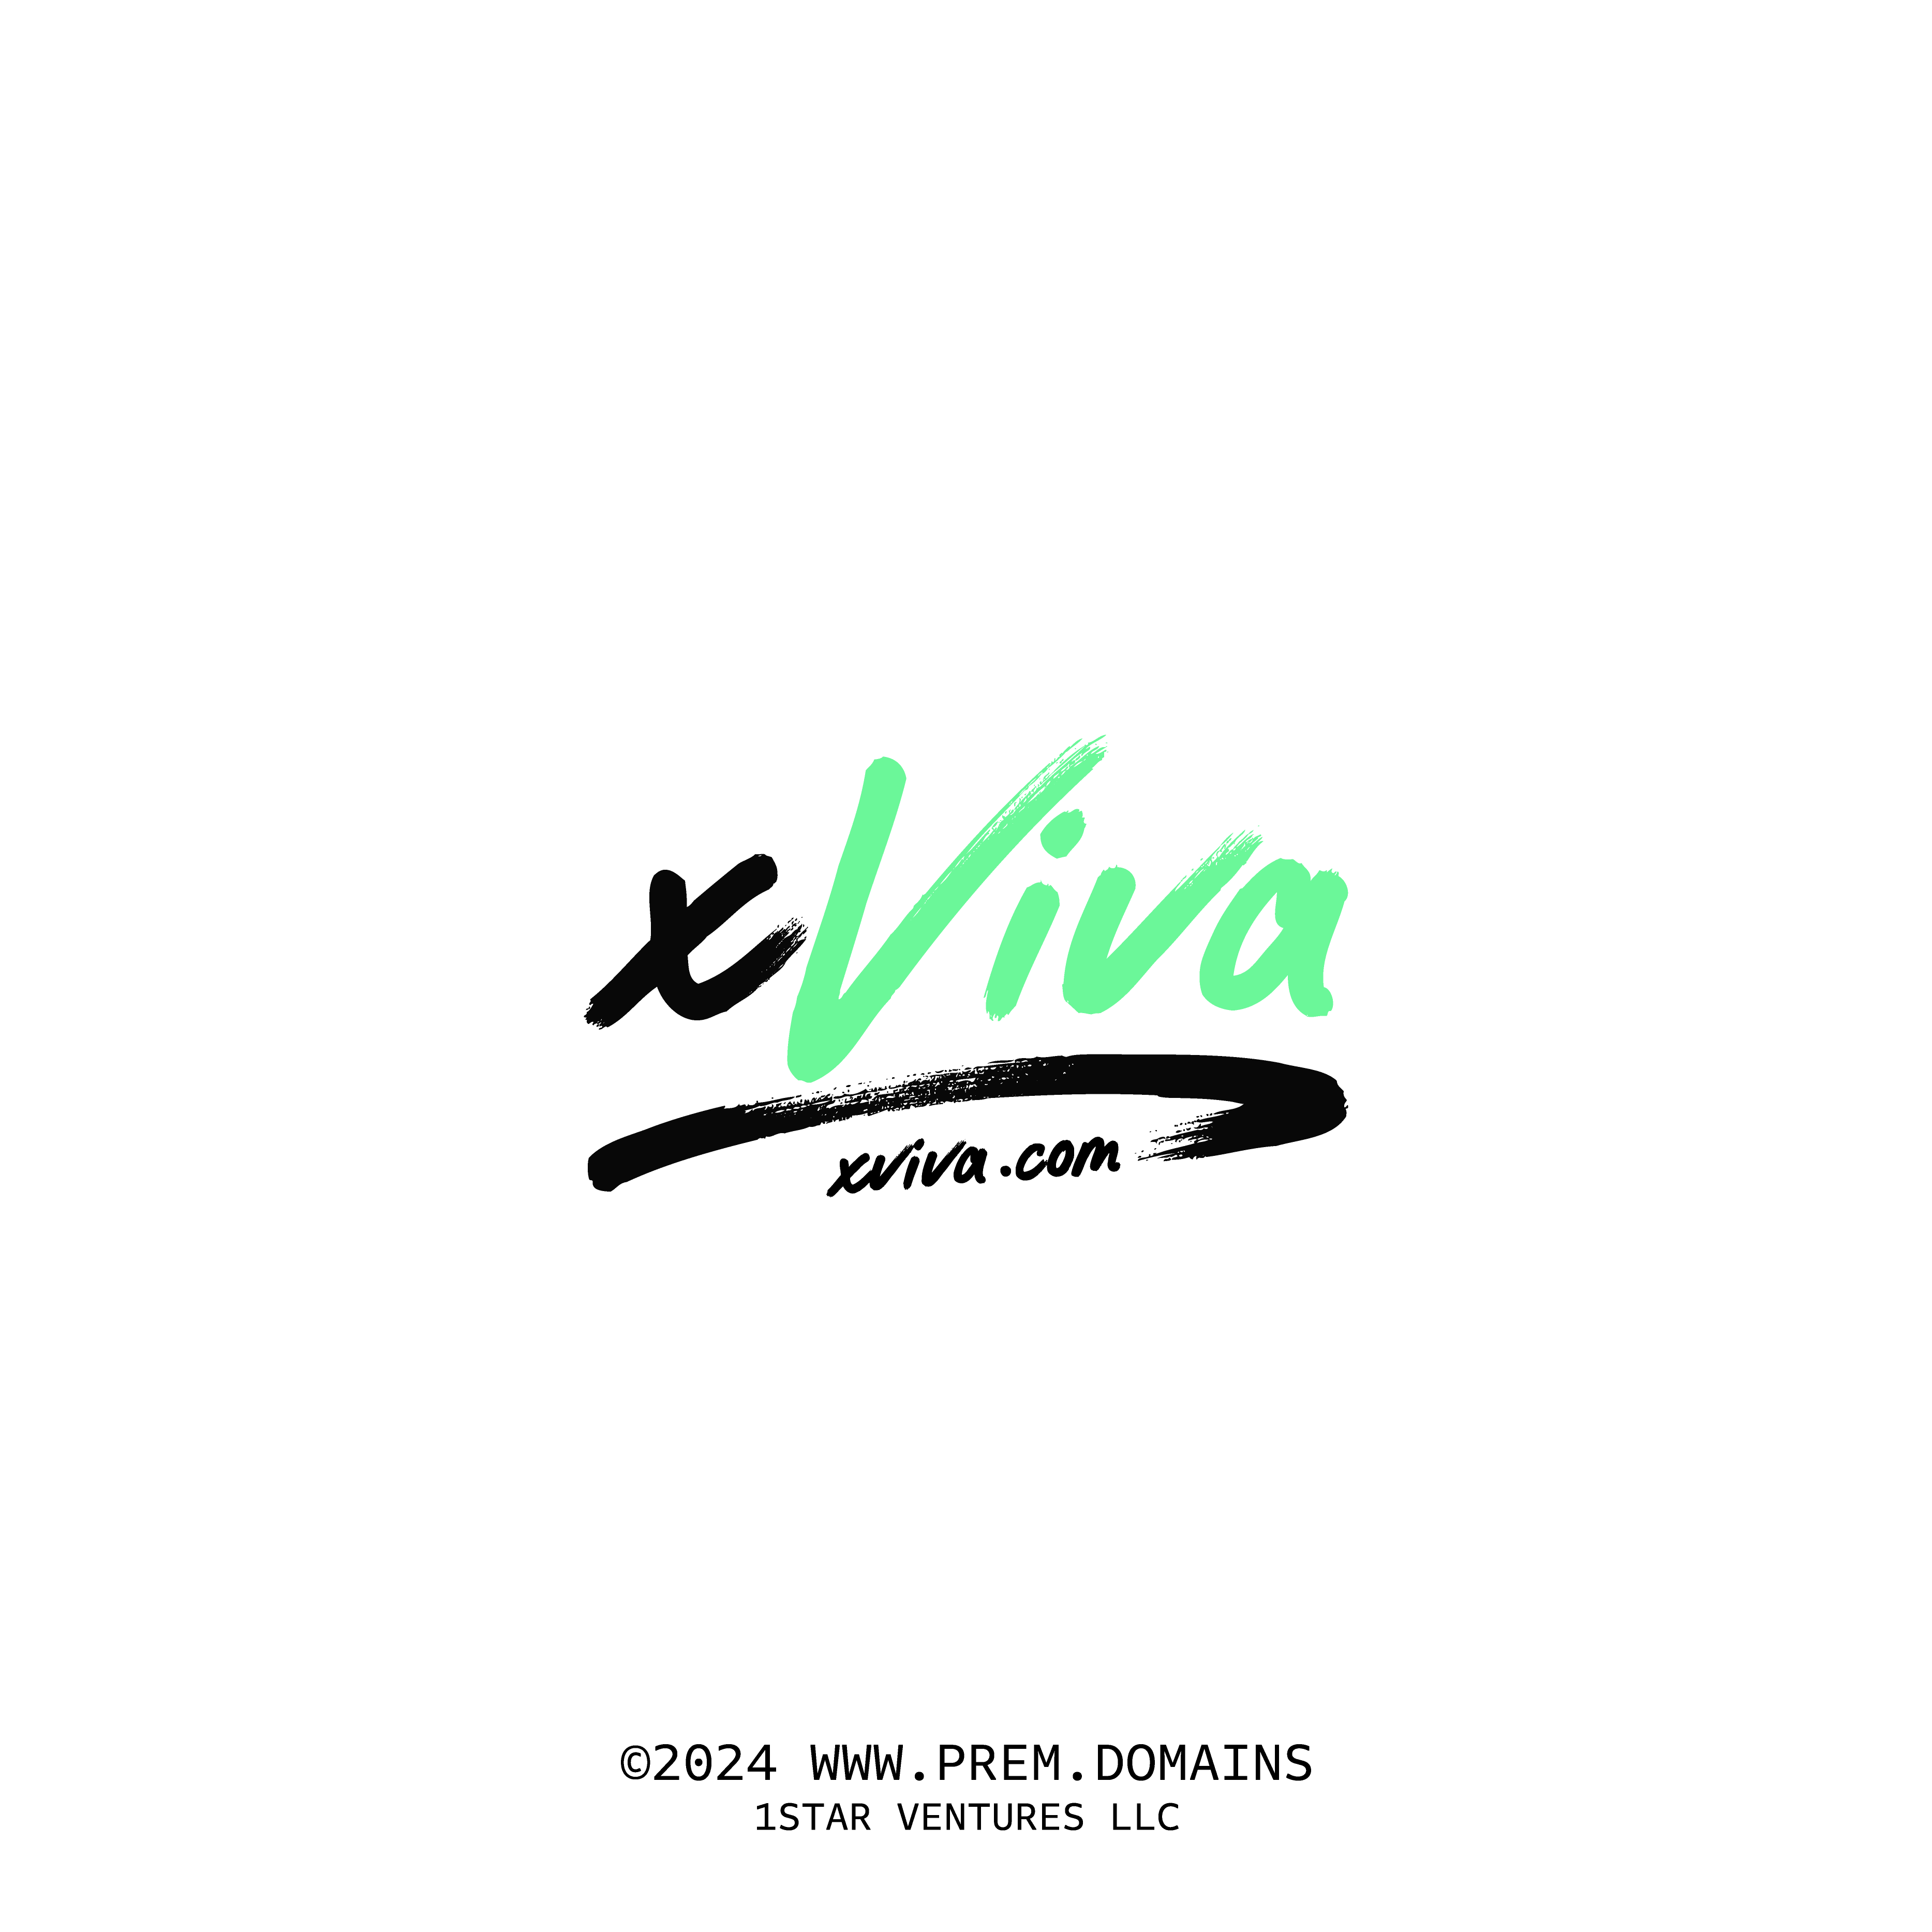 xviva.com custom logo product card image